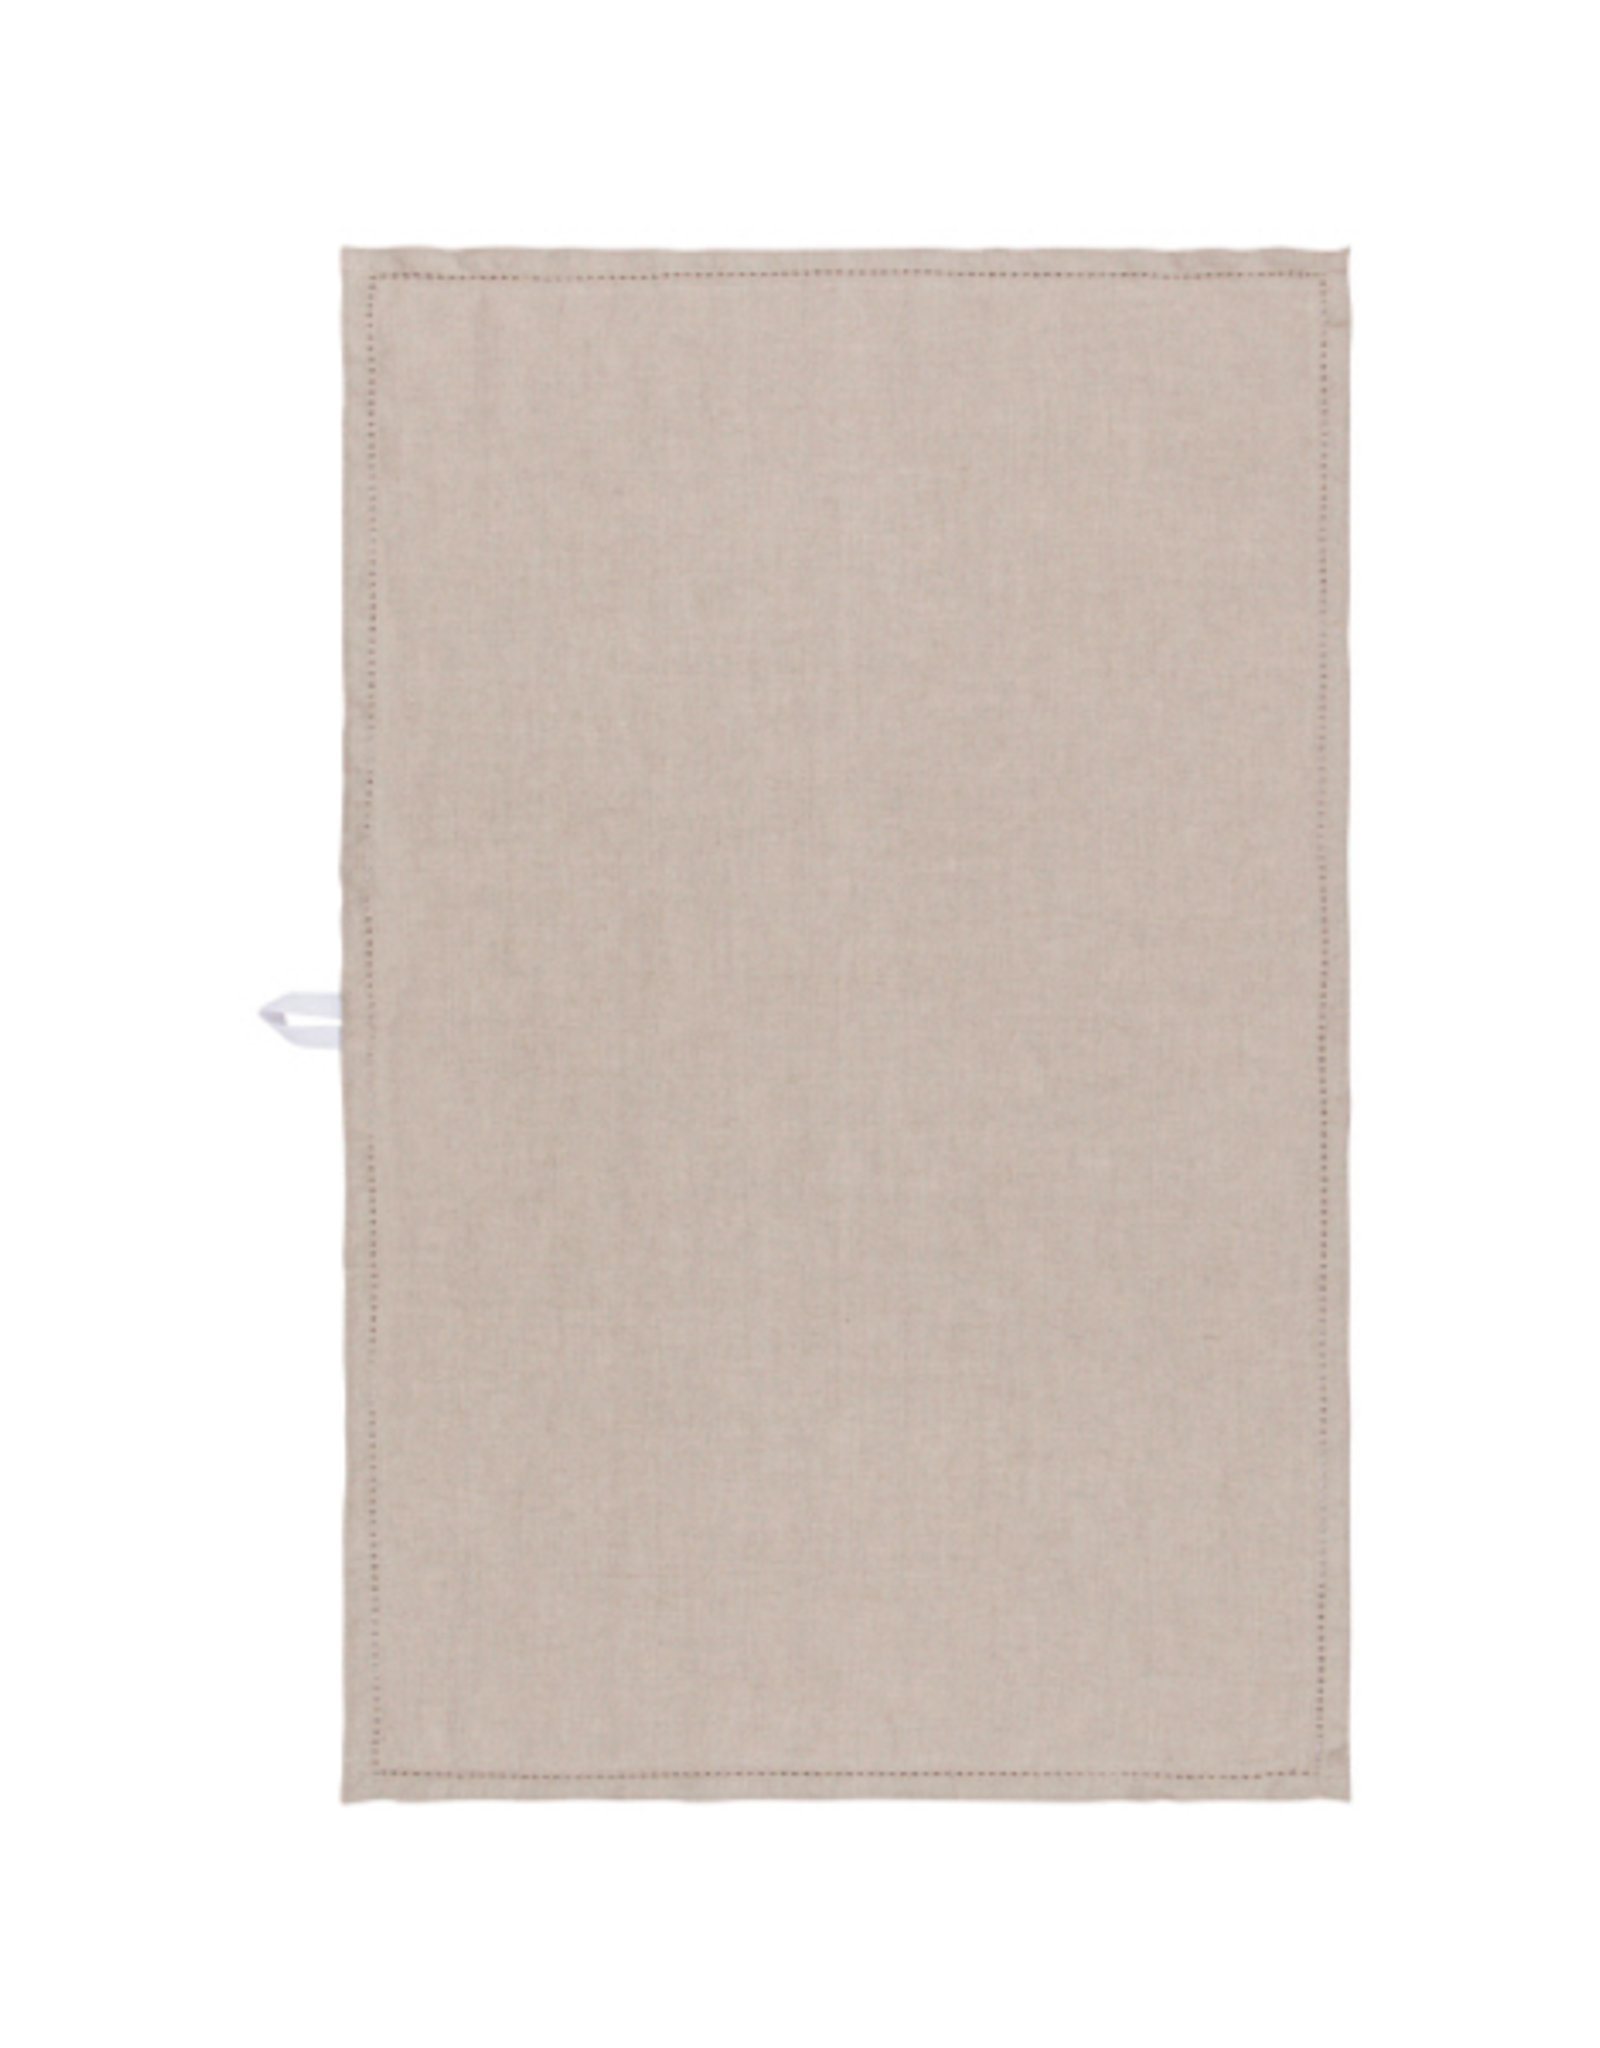 DCA - Tea Towel / Hemstitch Linen, Oat